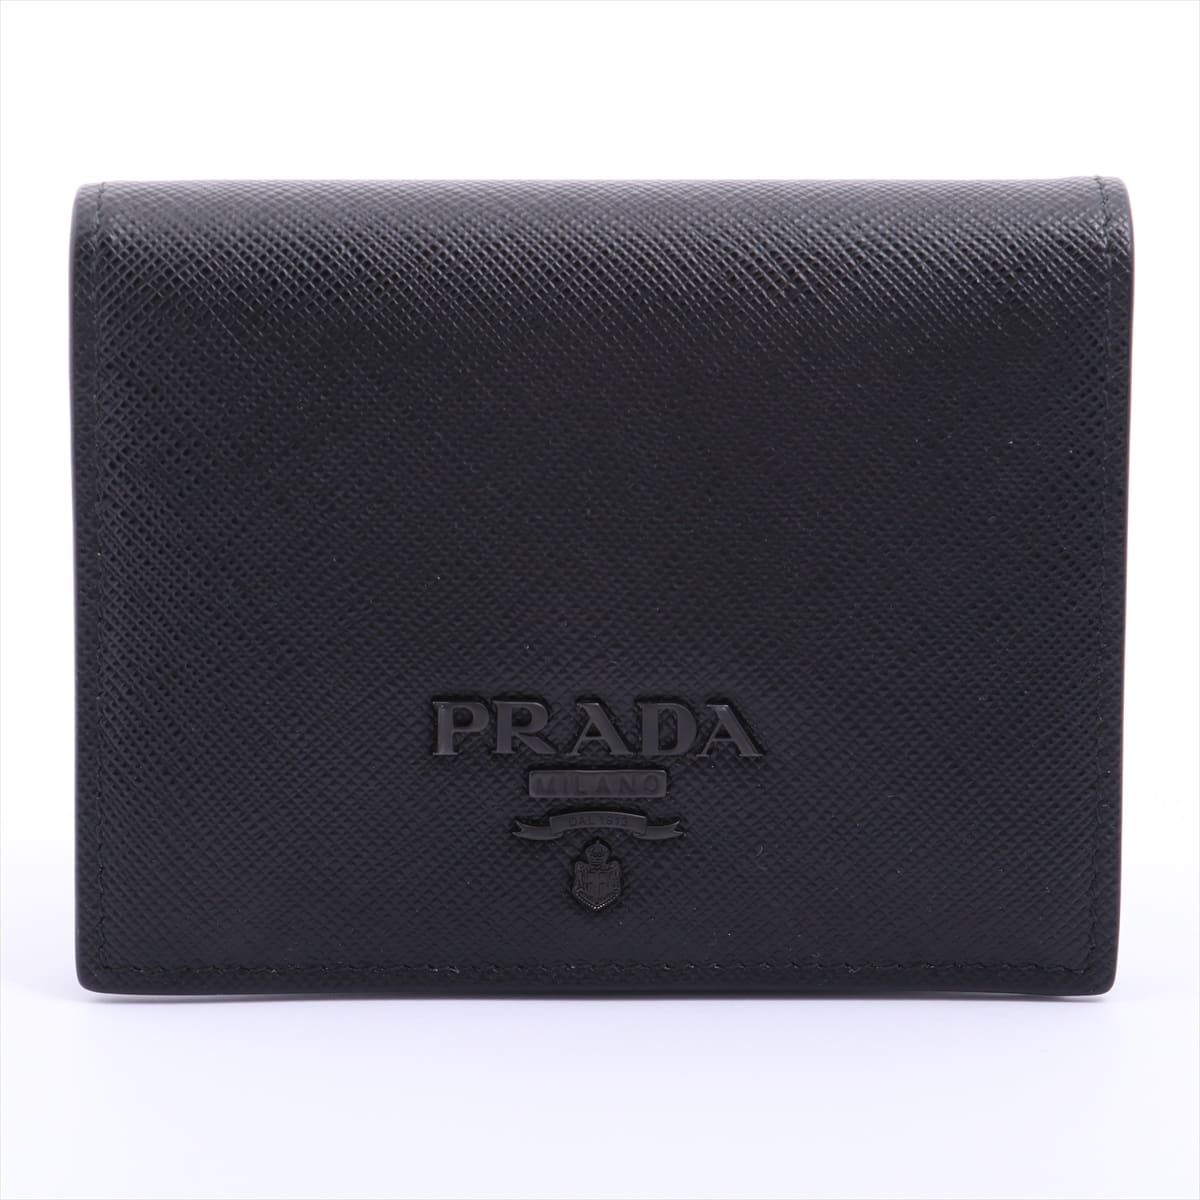 Prada SAFFIANO SHINE 1MV204 Leather Wallet Black